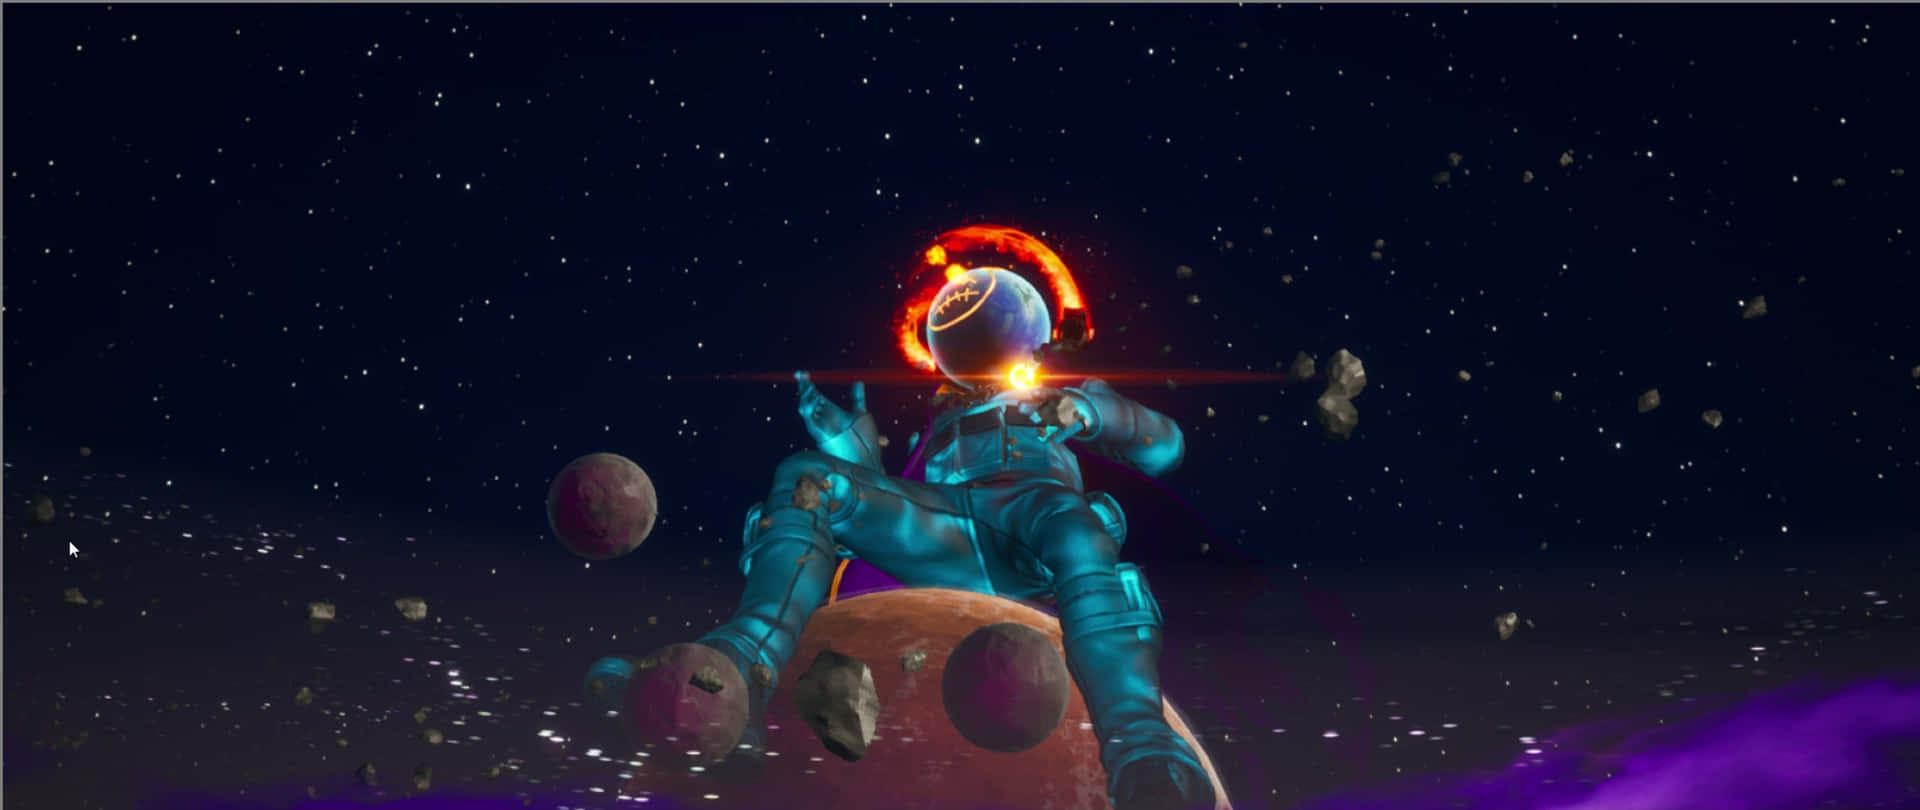 Astro Jack In Space Wallpaper